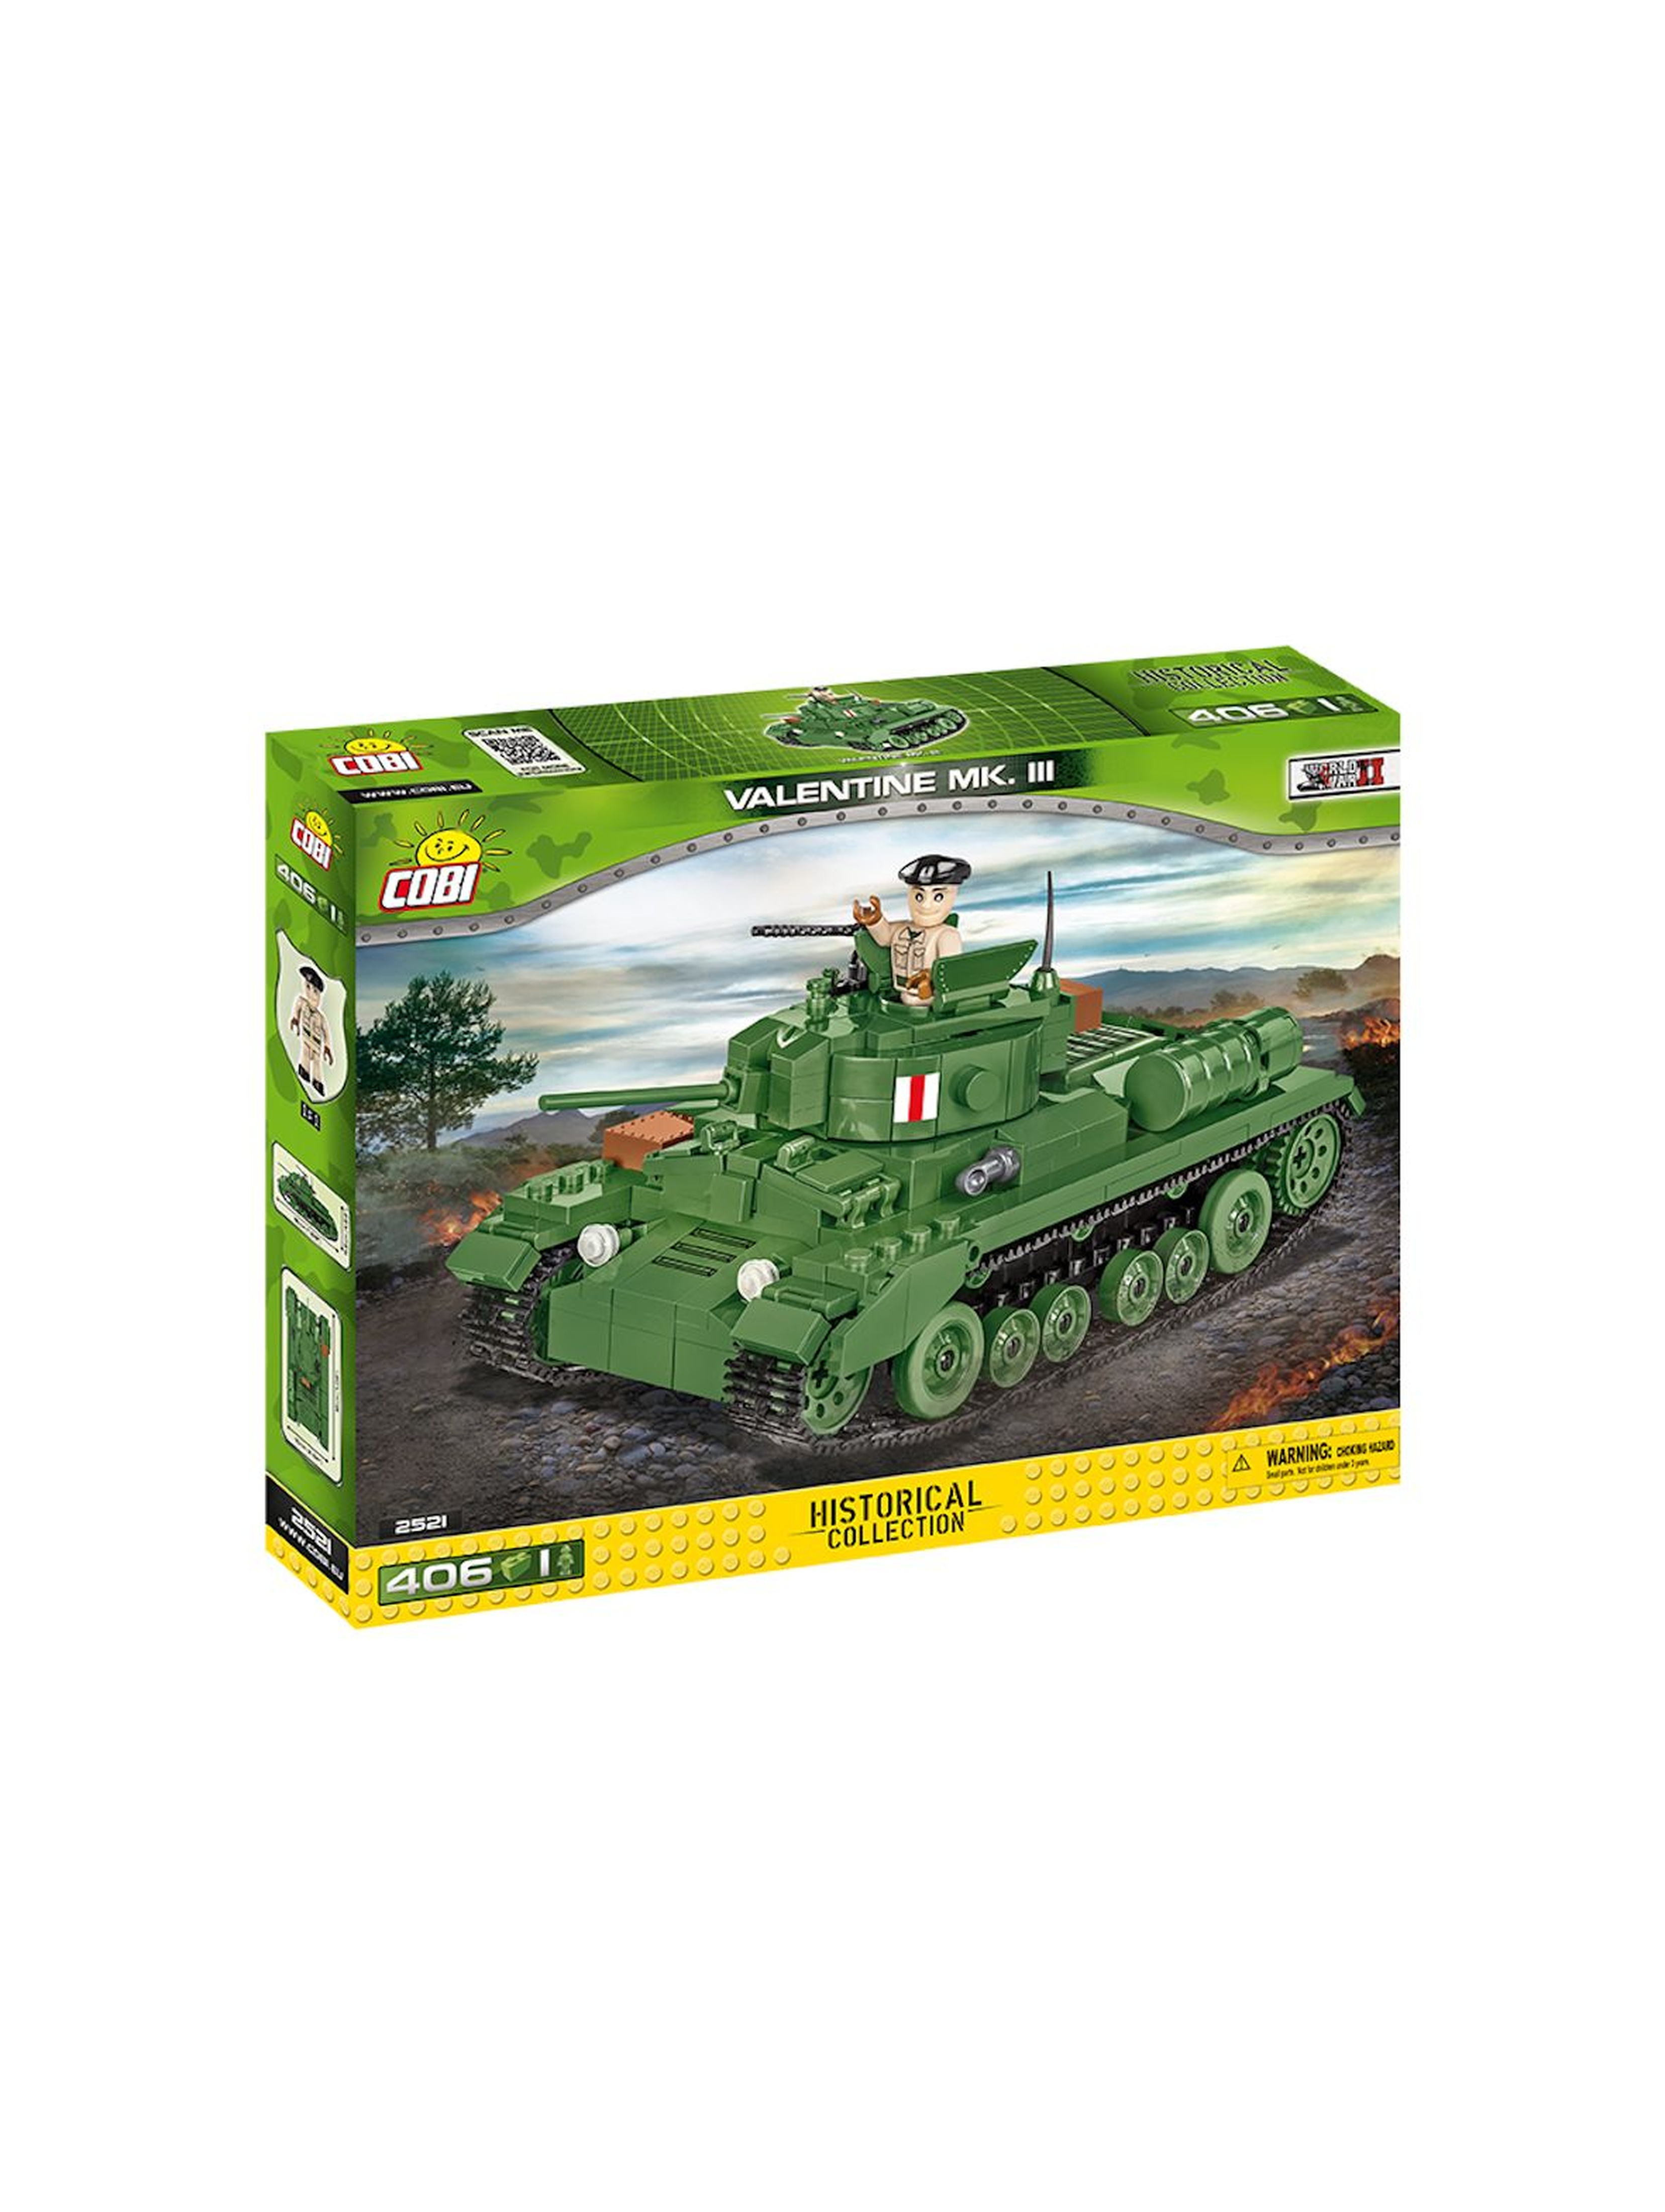 Klocki Cobi Small Army Ainfantry Tank MKIII Valeritin 406el